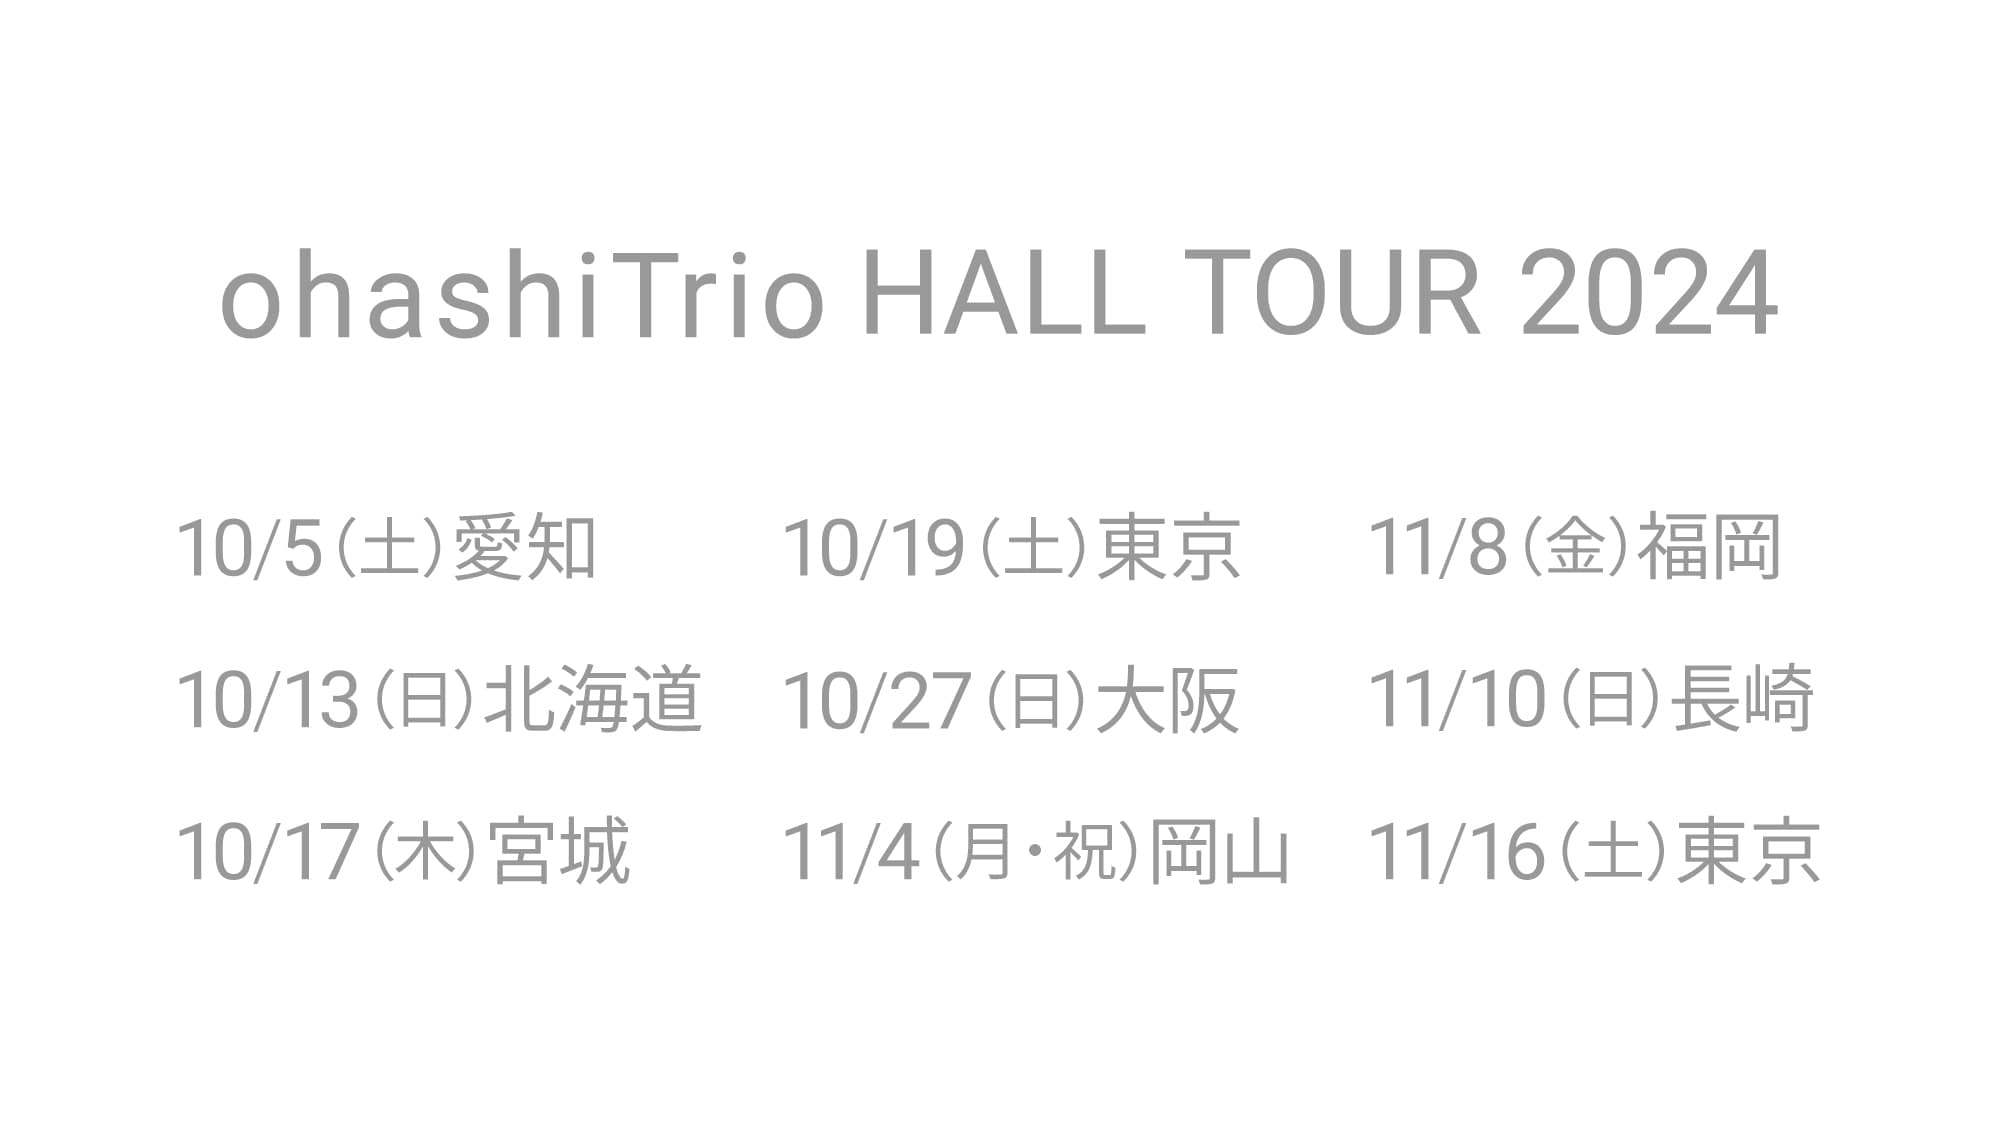 ohashiTrio HALL TOUR 2024